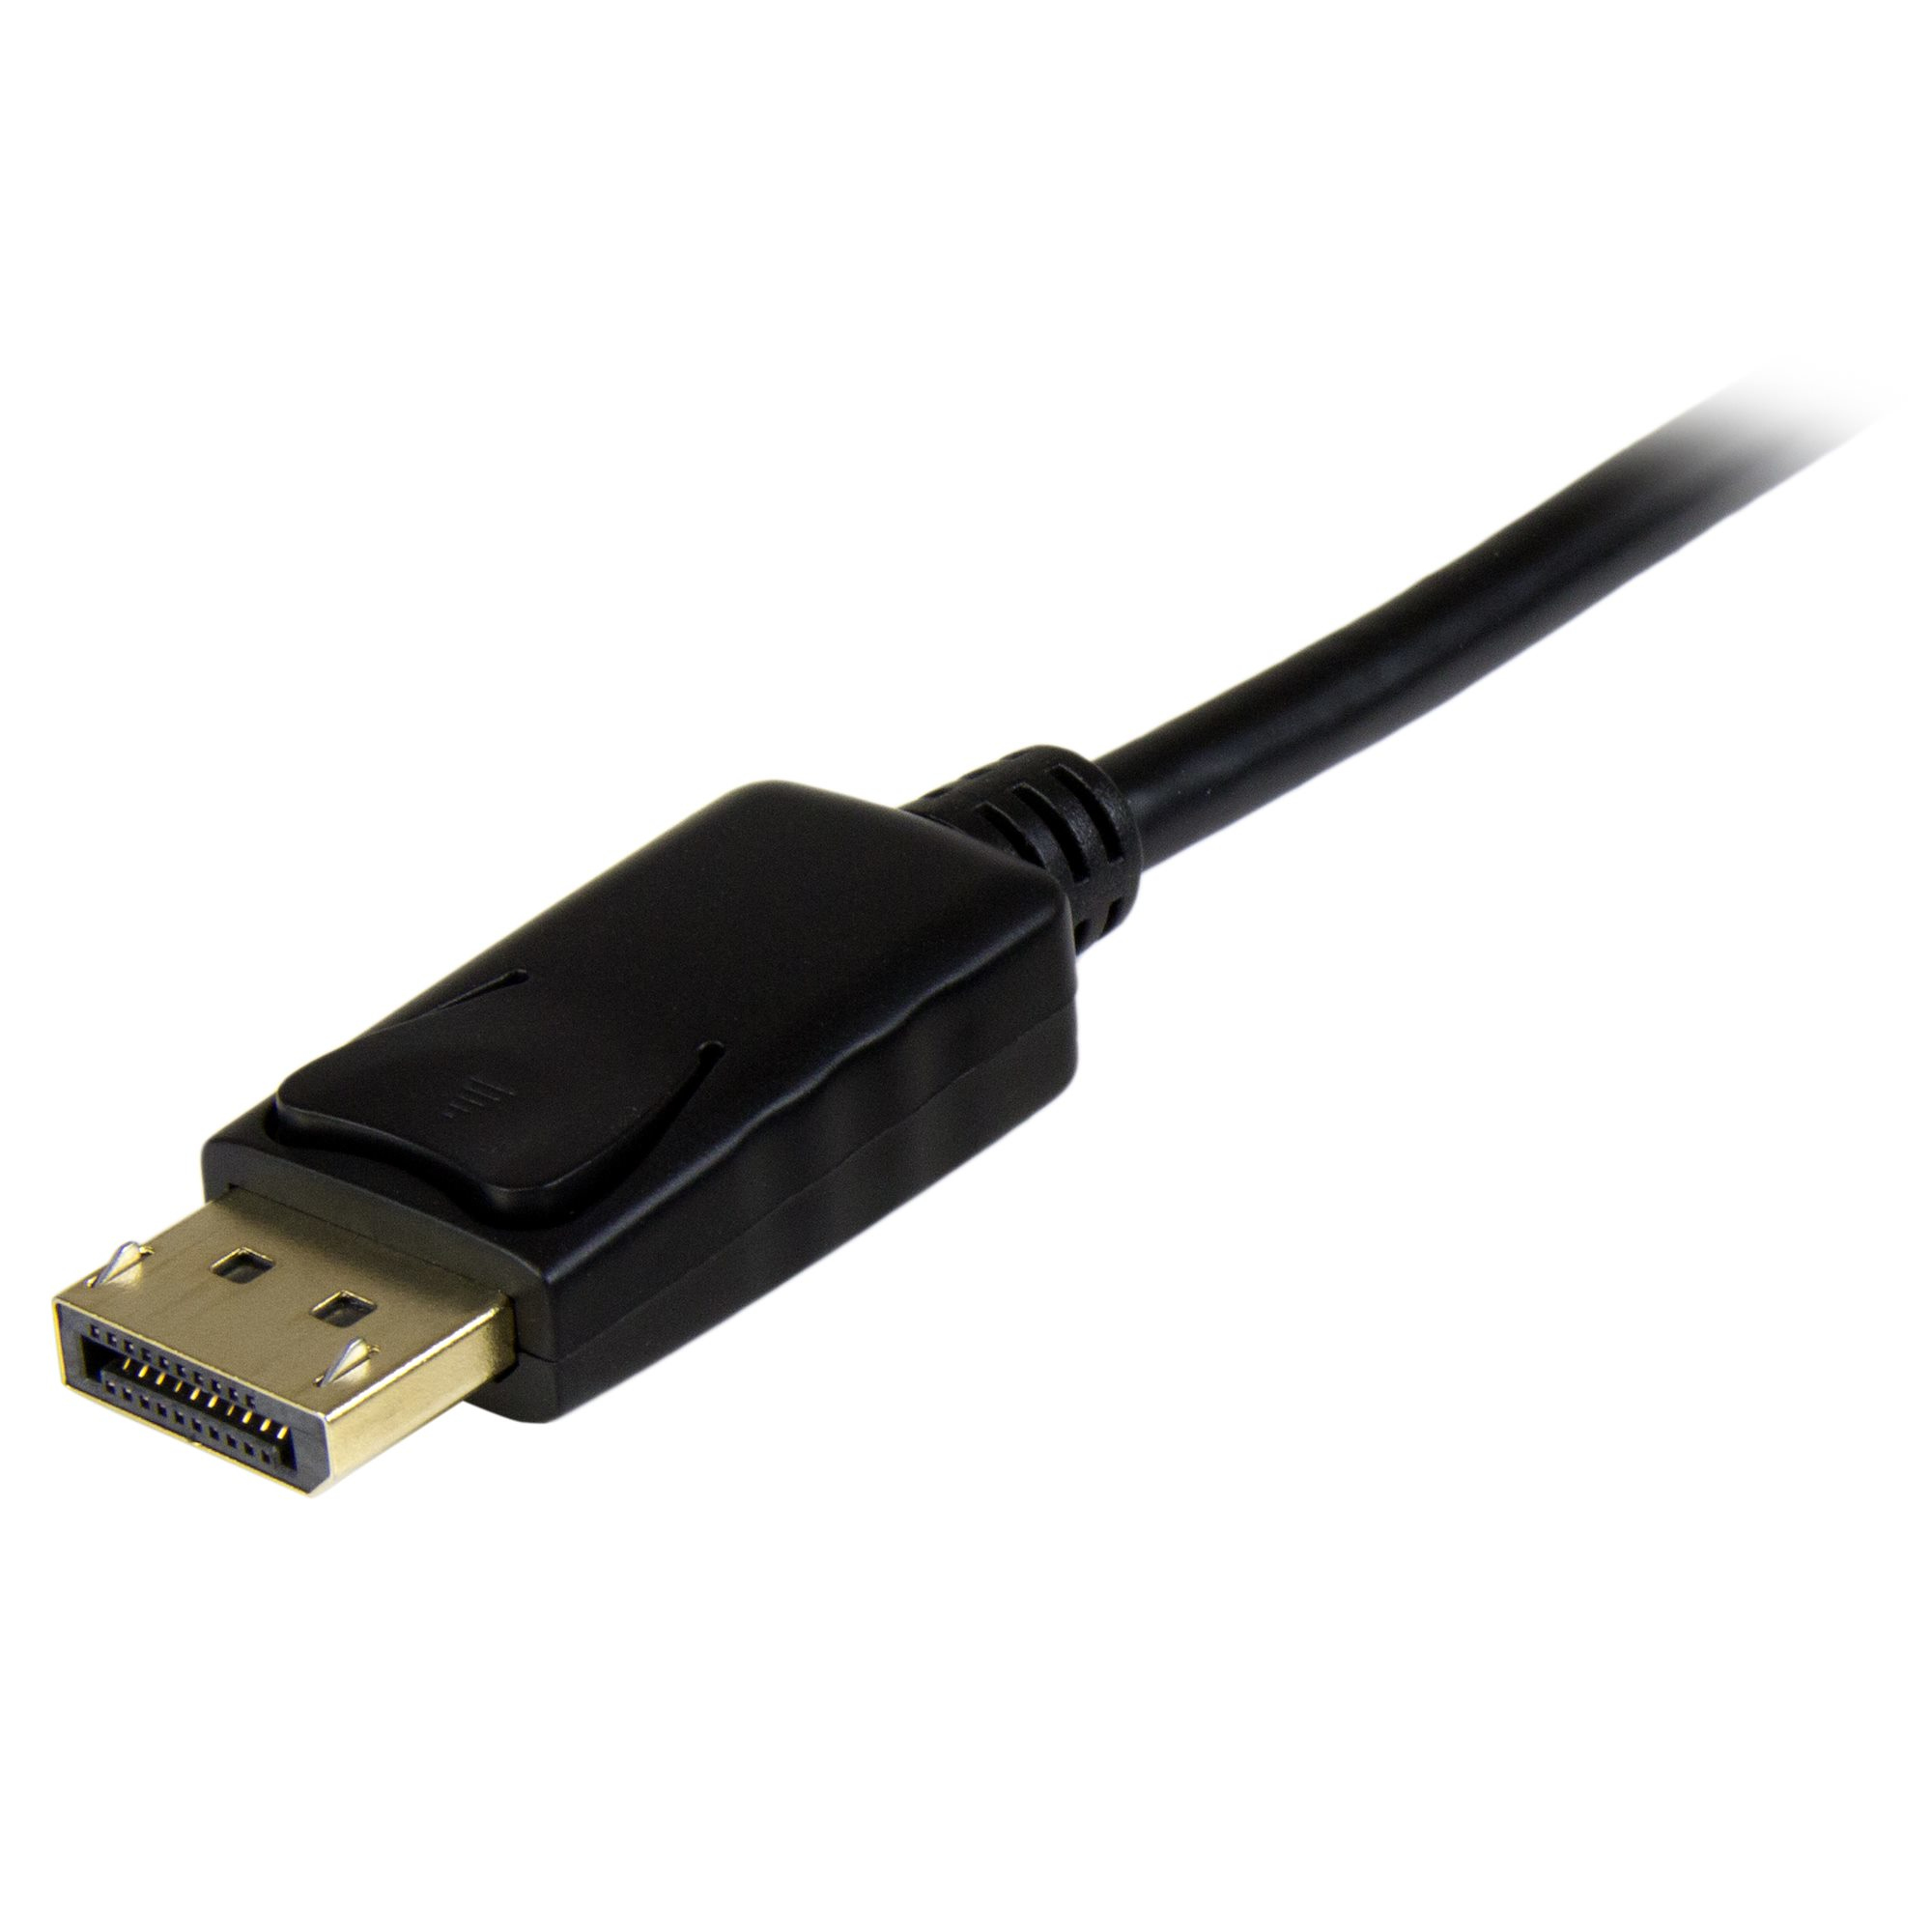 Mini DisplayPort 1.2 to DisplayPort 1.2 Cable, 6ft